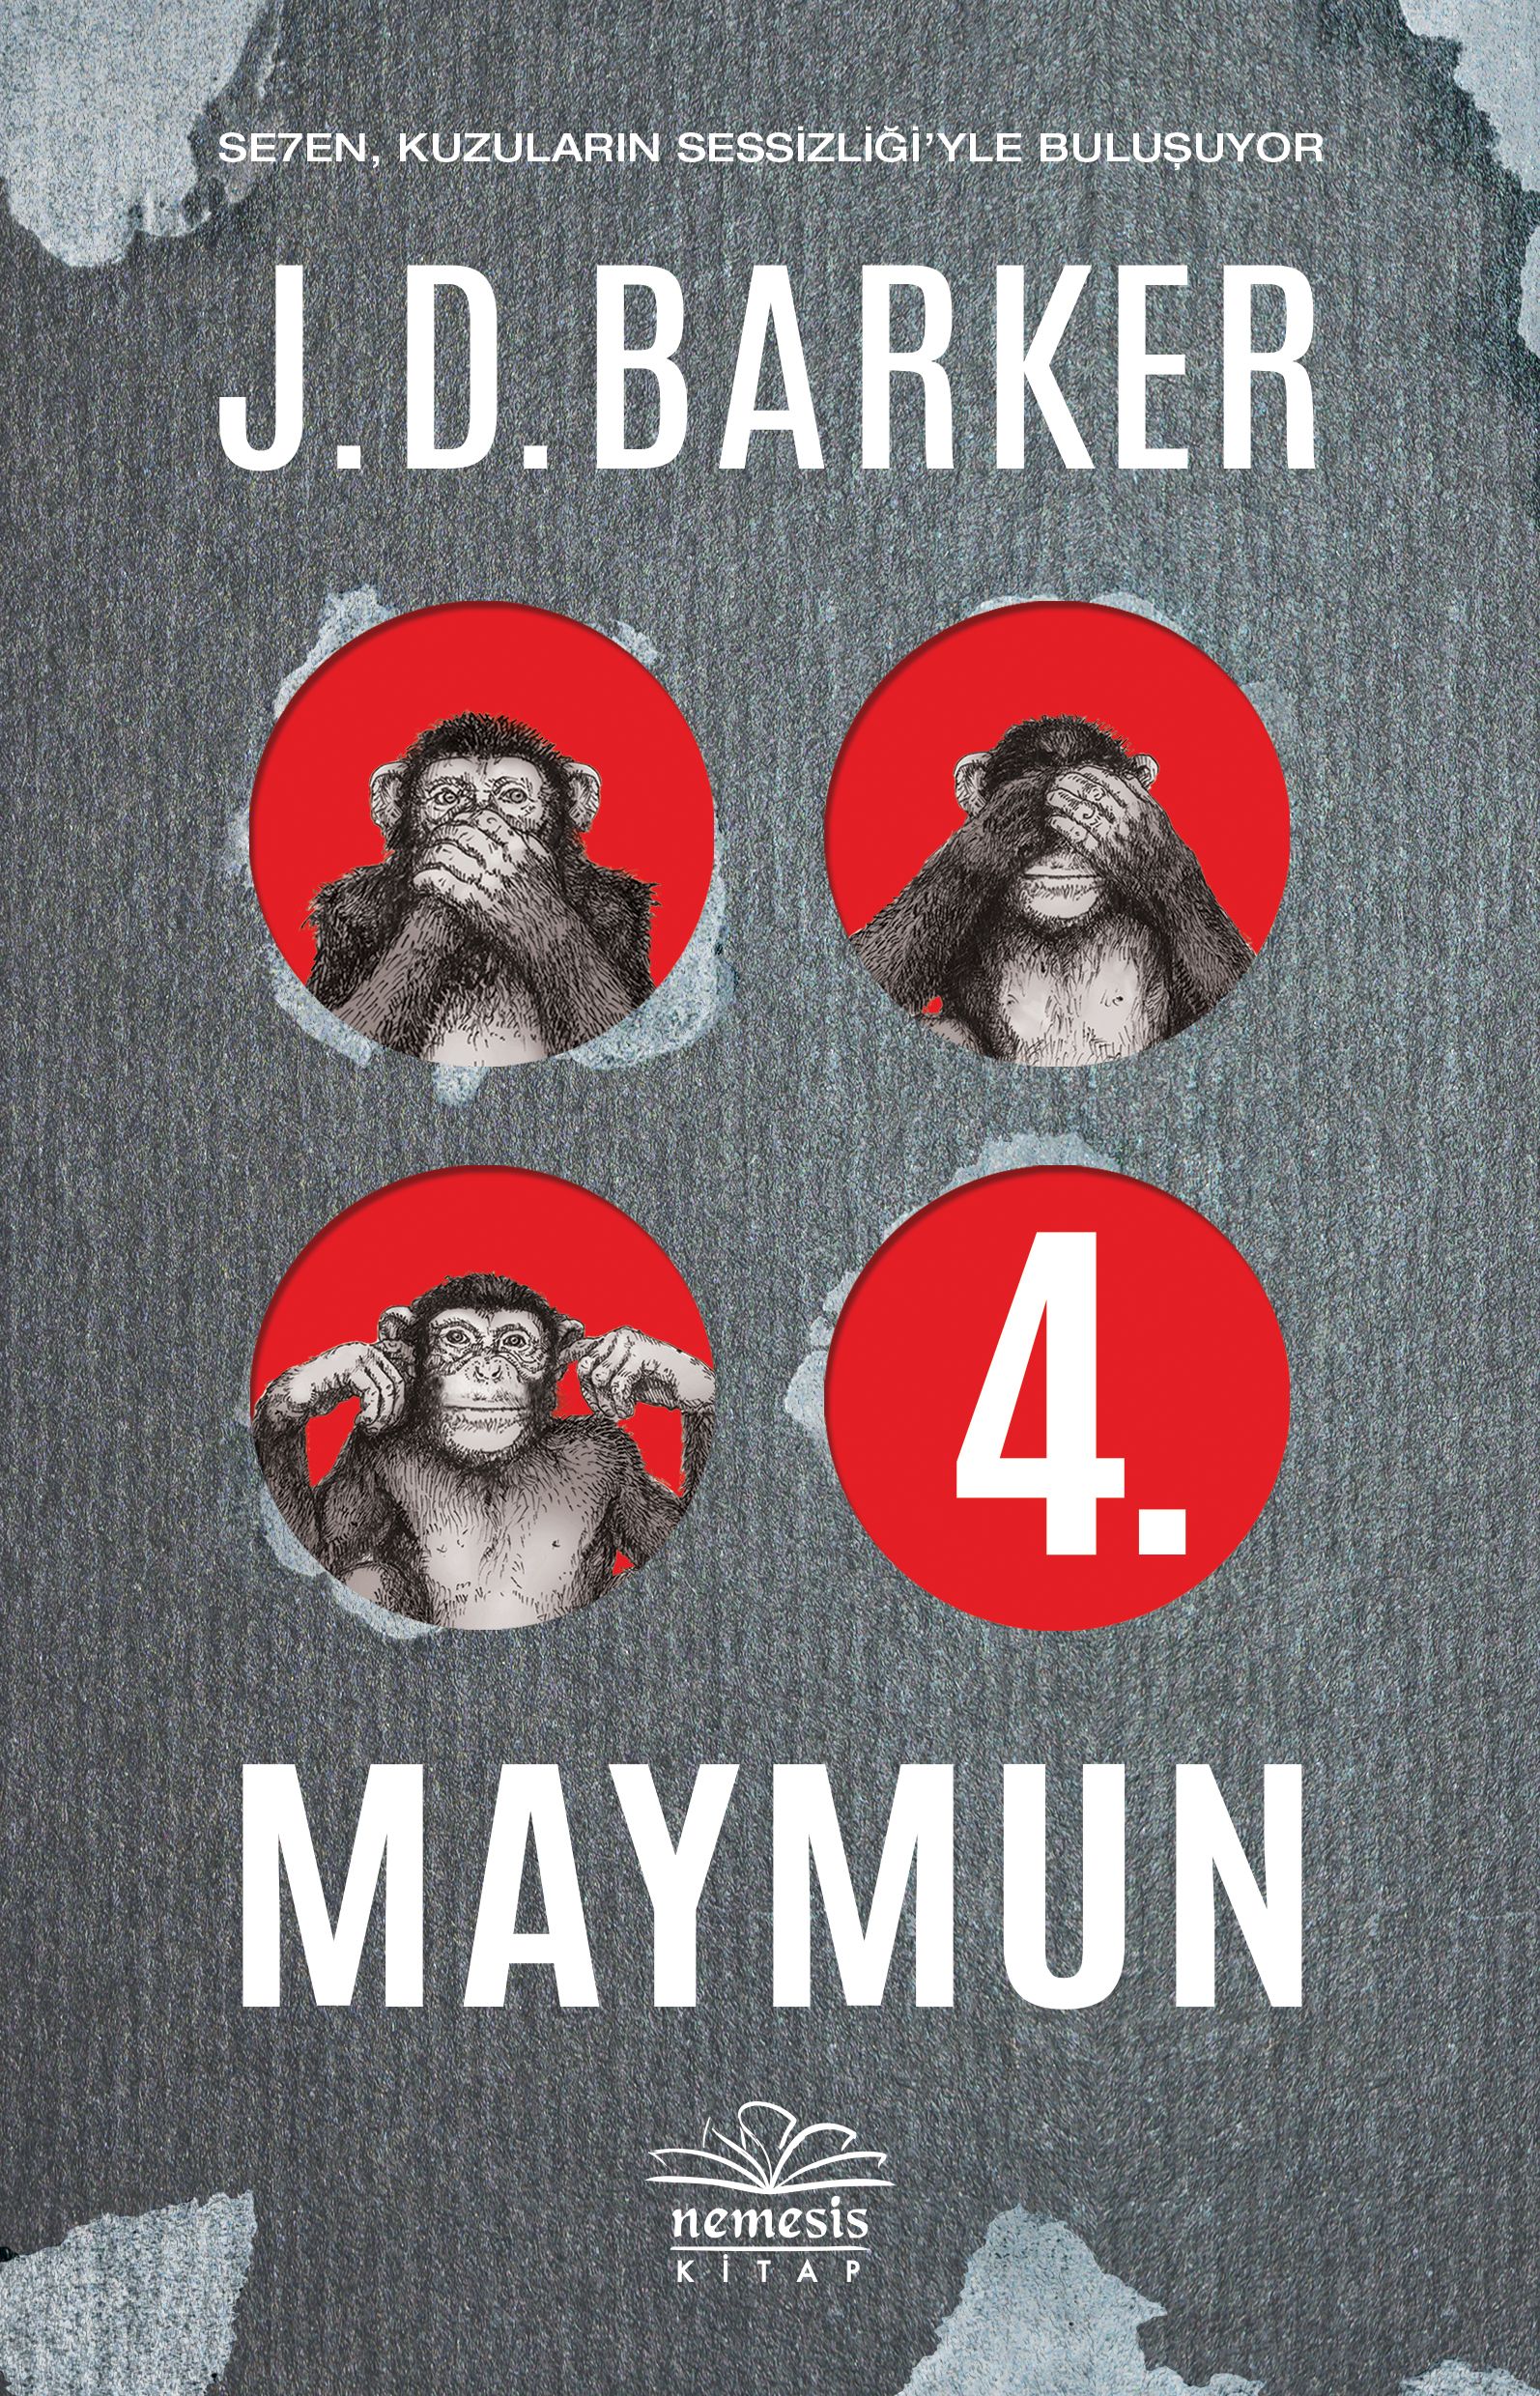 4. Maymun